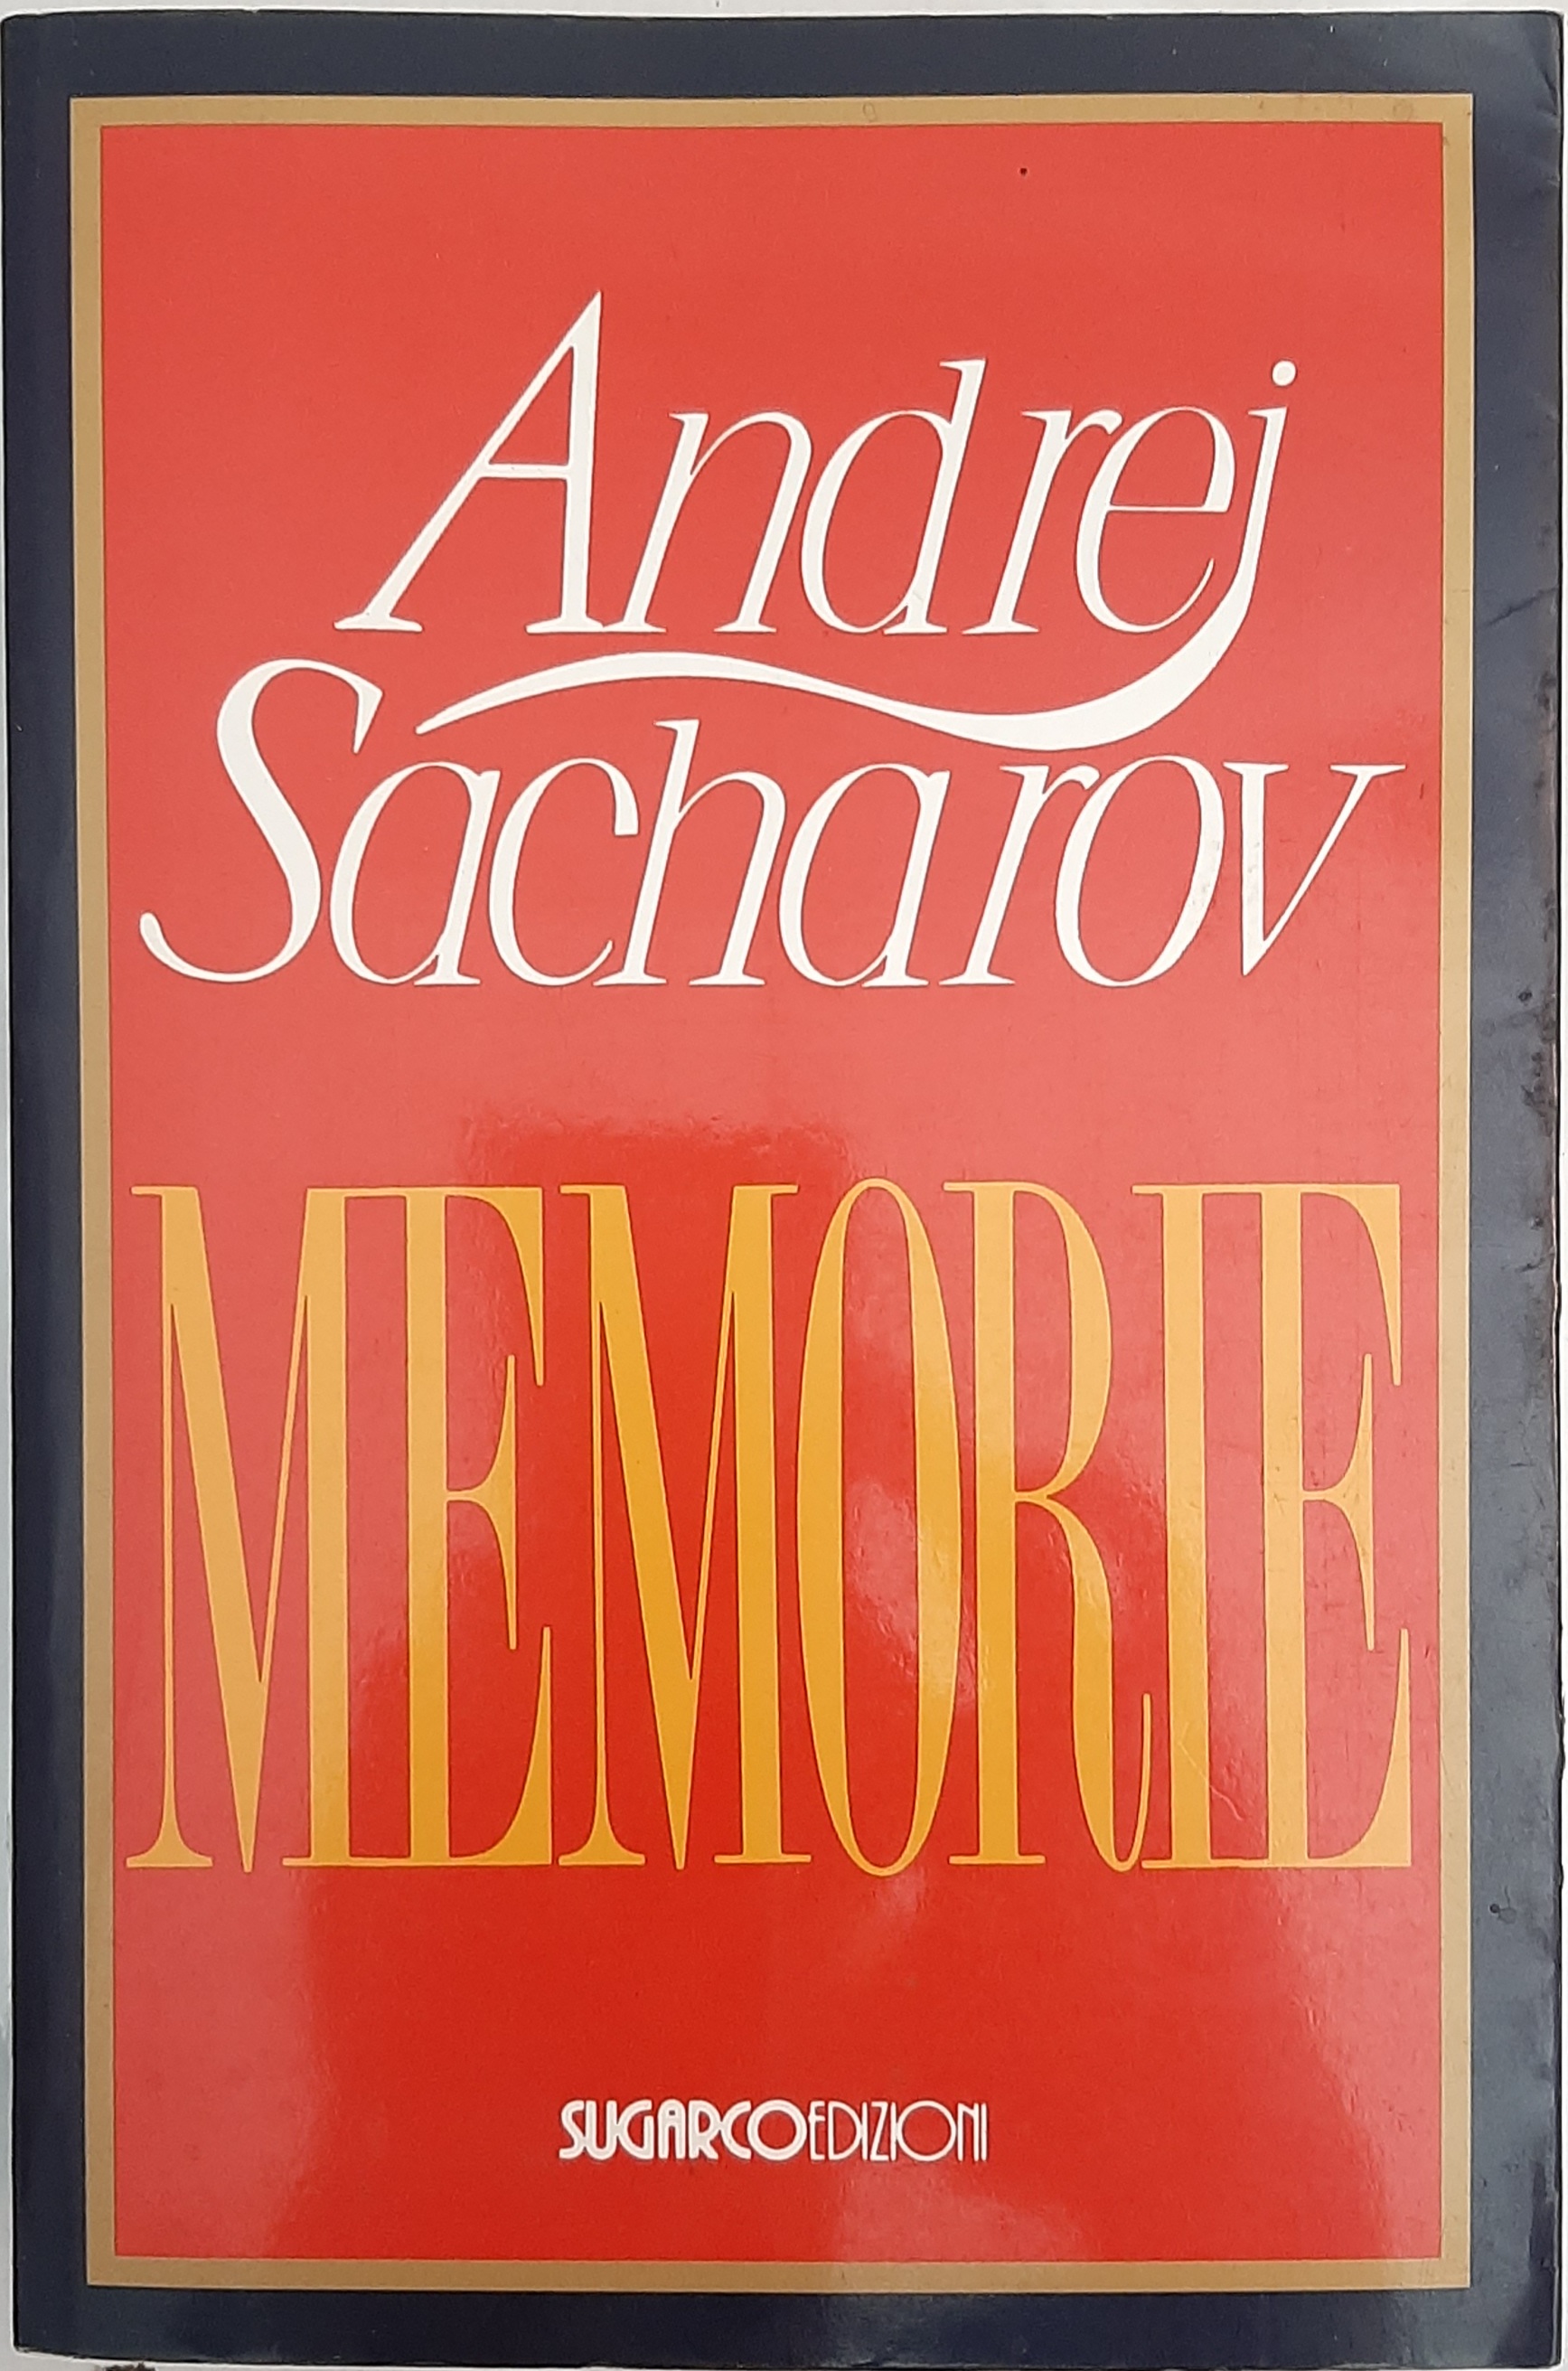 ANDREJ SACHAROV - MEMORIE EDIZIONE 1990 SUGARCO PAG. 928